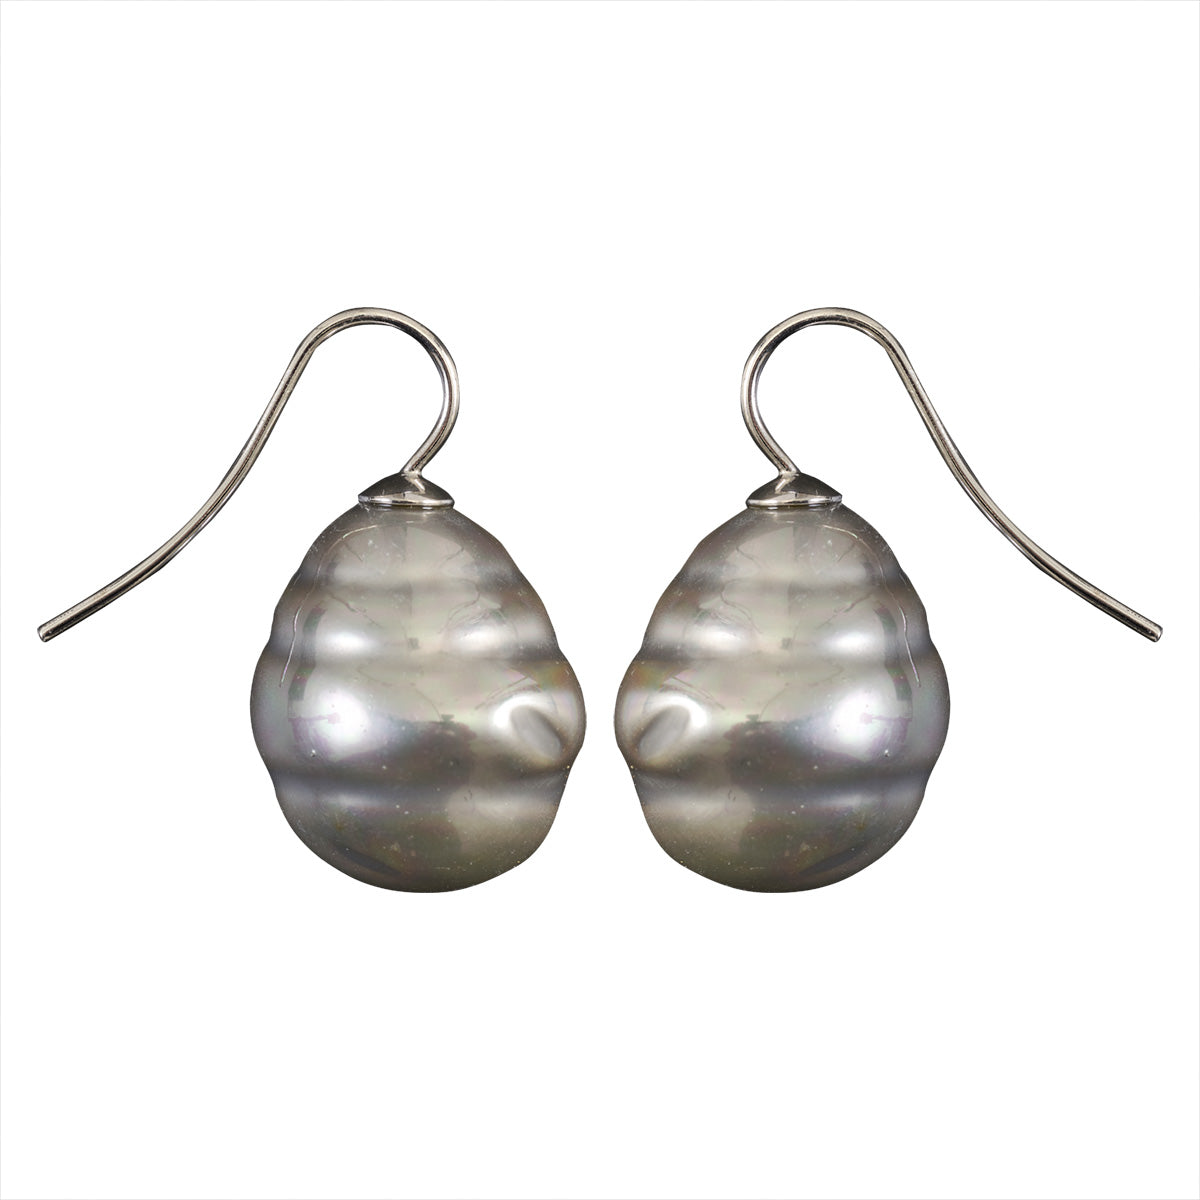 Mother of Pearl Hook Earrings - Grey L